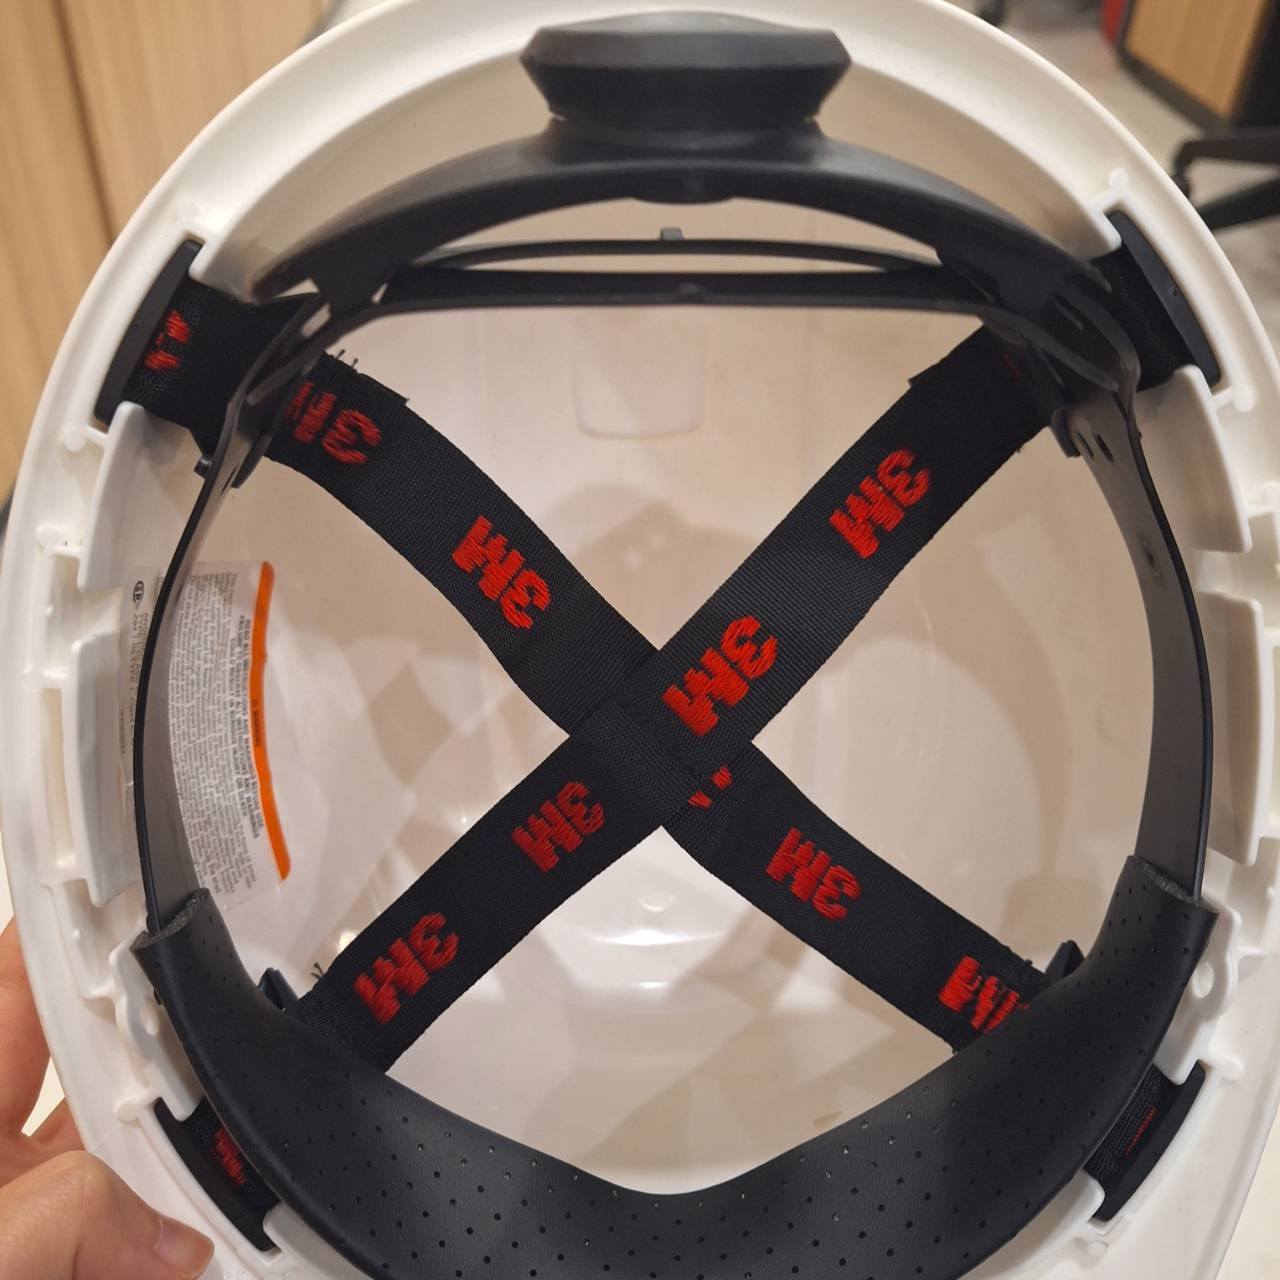 Helm safety warna putih dengan ratchet suspension